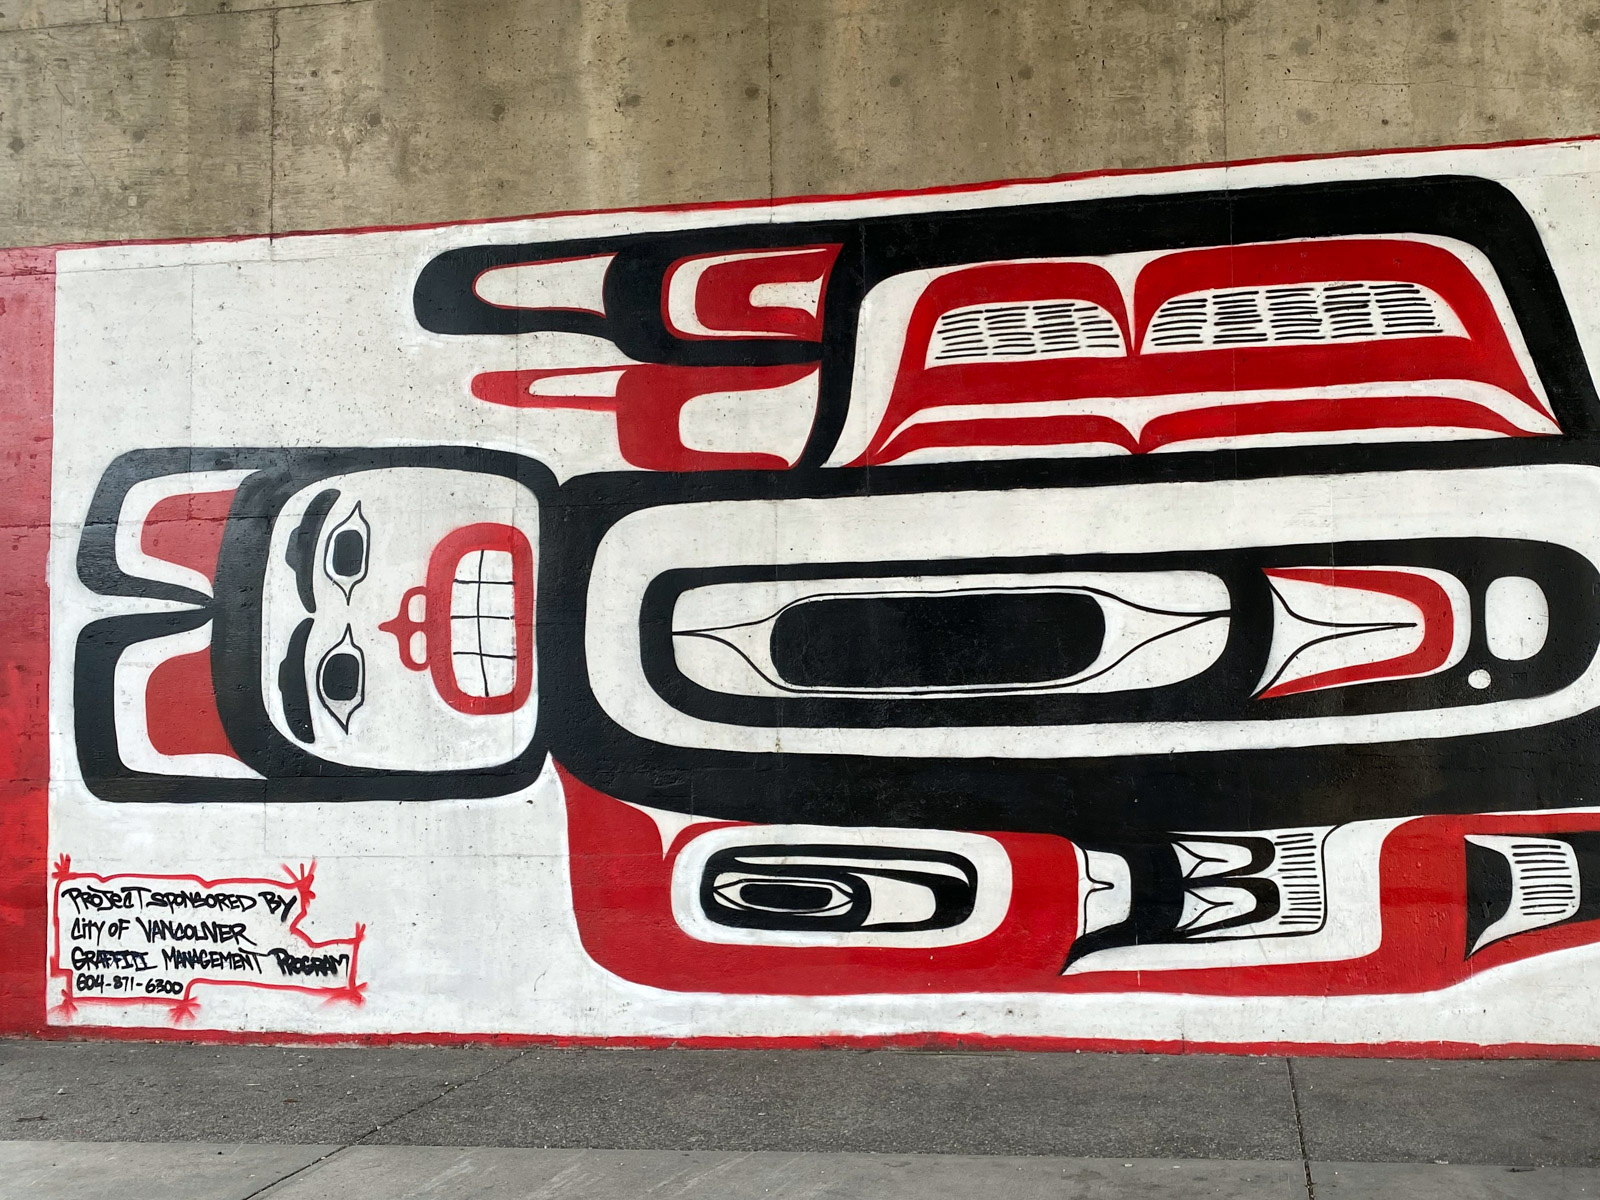 Indigenous mural art in Vancouver